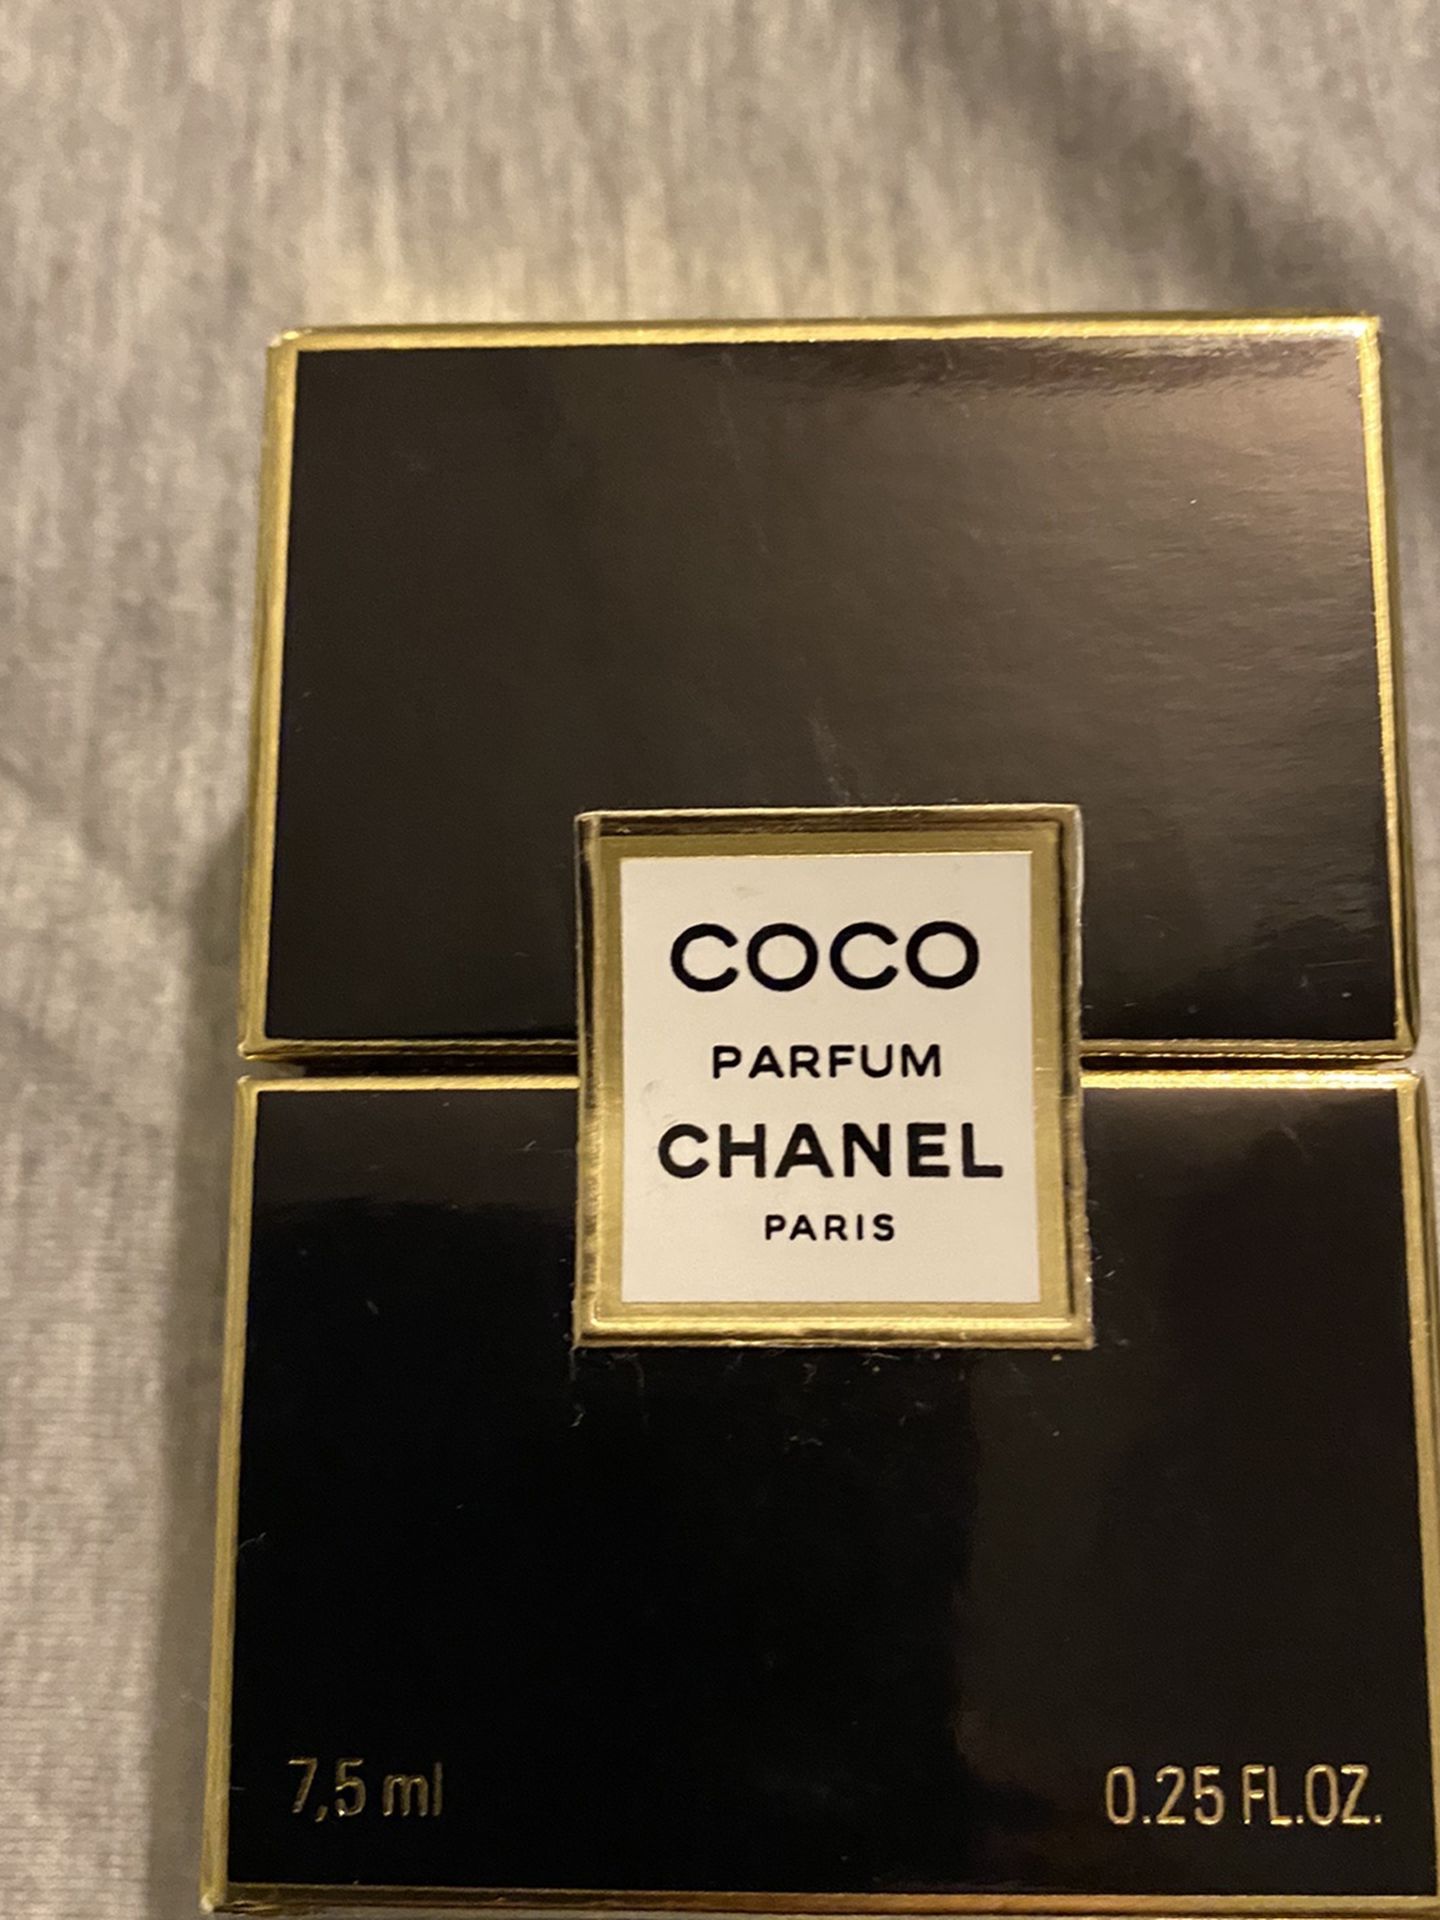 Coco Parfum Chanel Paris Perfume